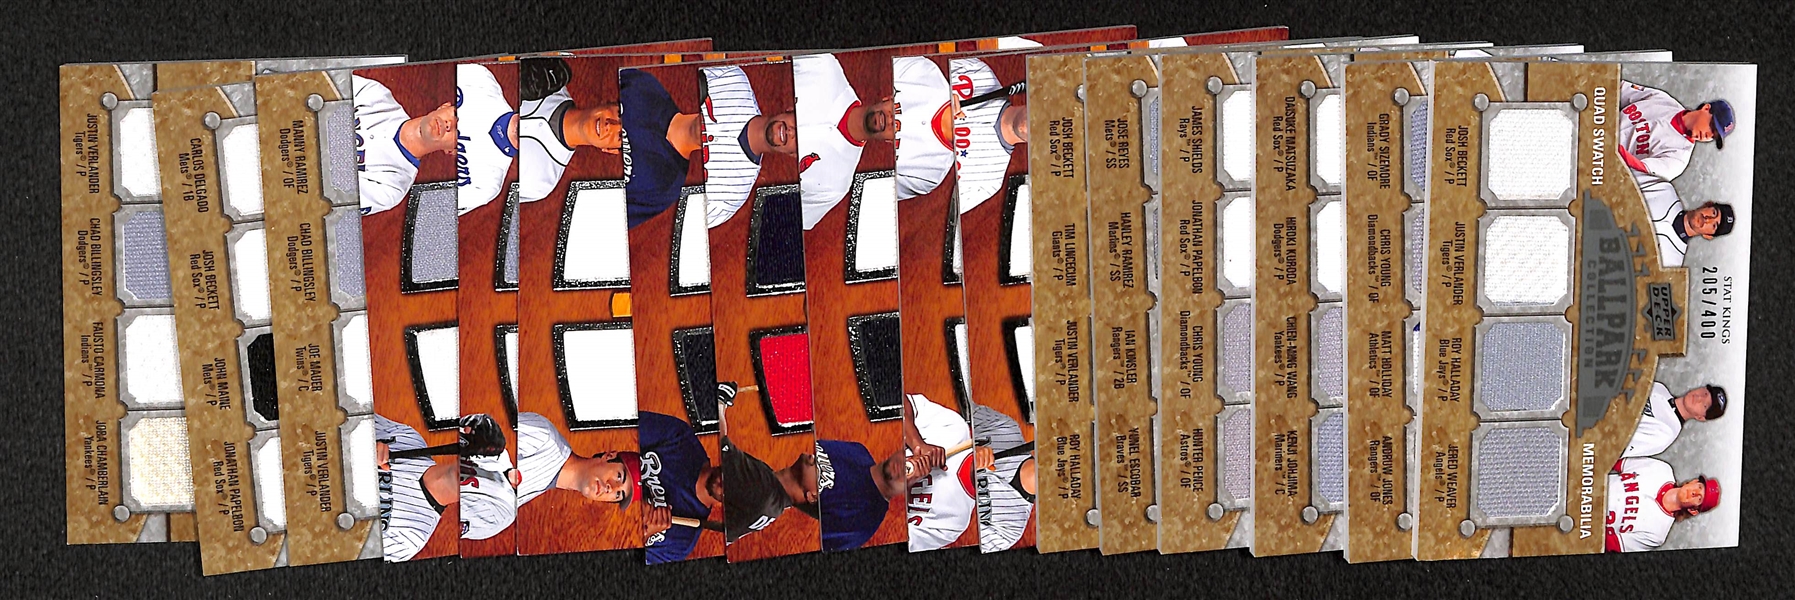 Lot Of 17 Baseball Quad Jersey Cards w. Jeter & Pujols